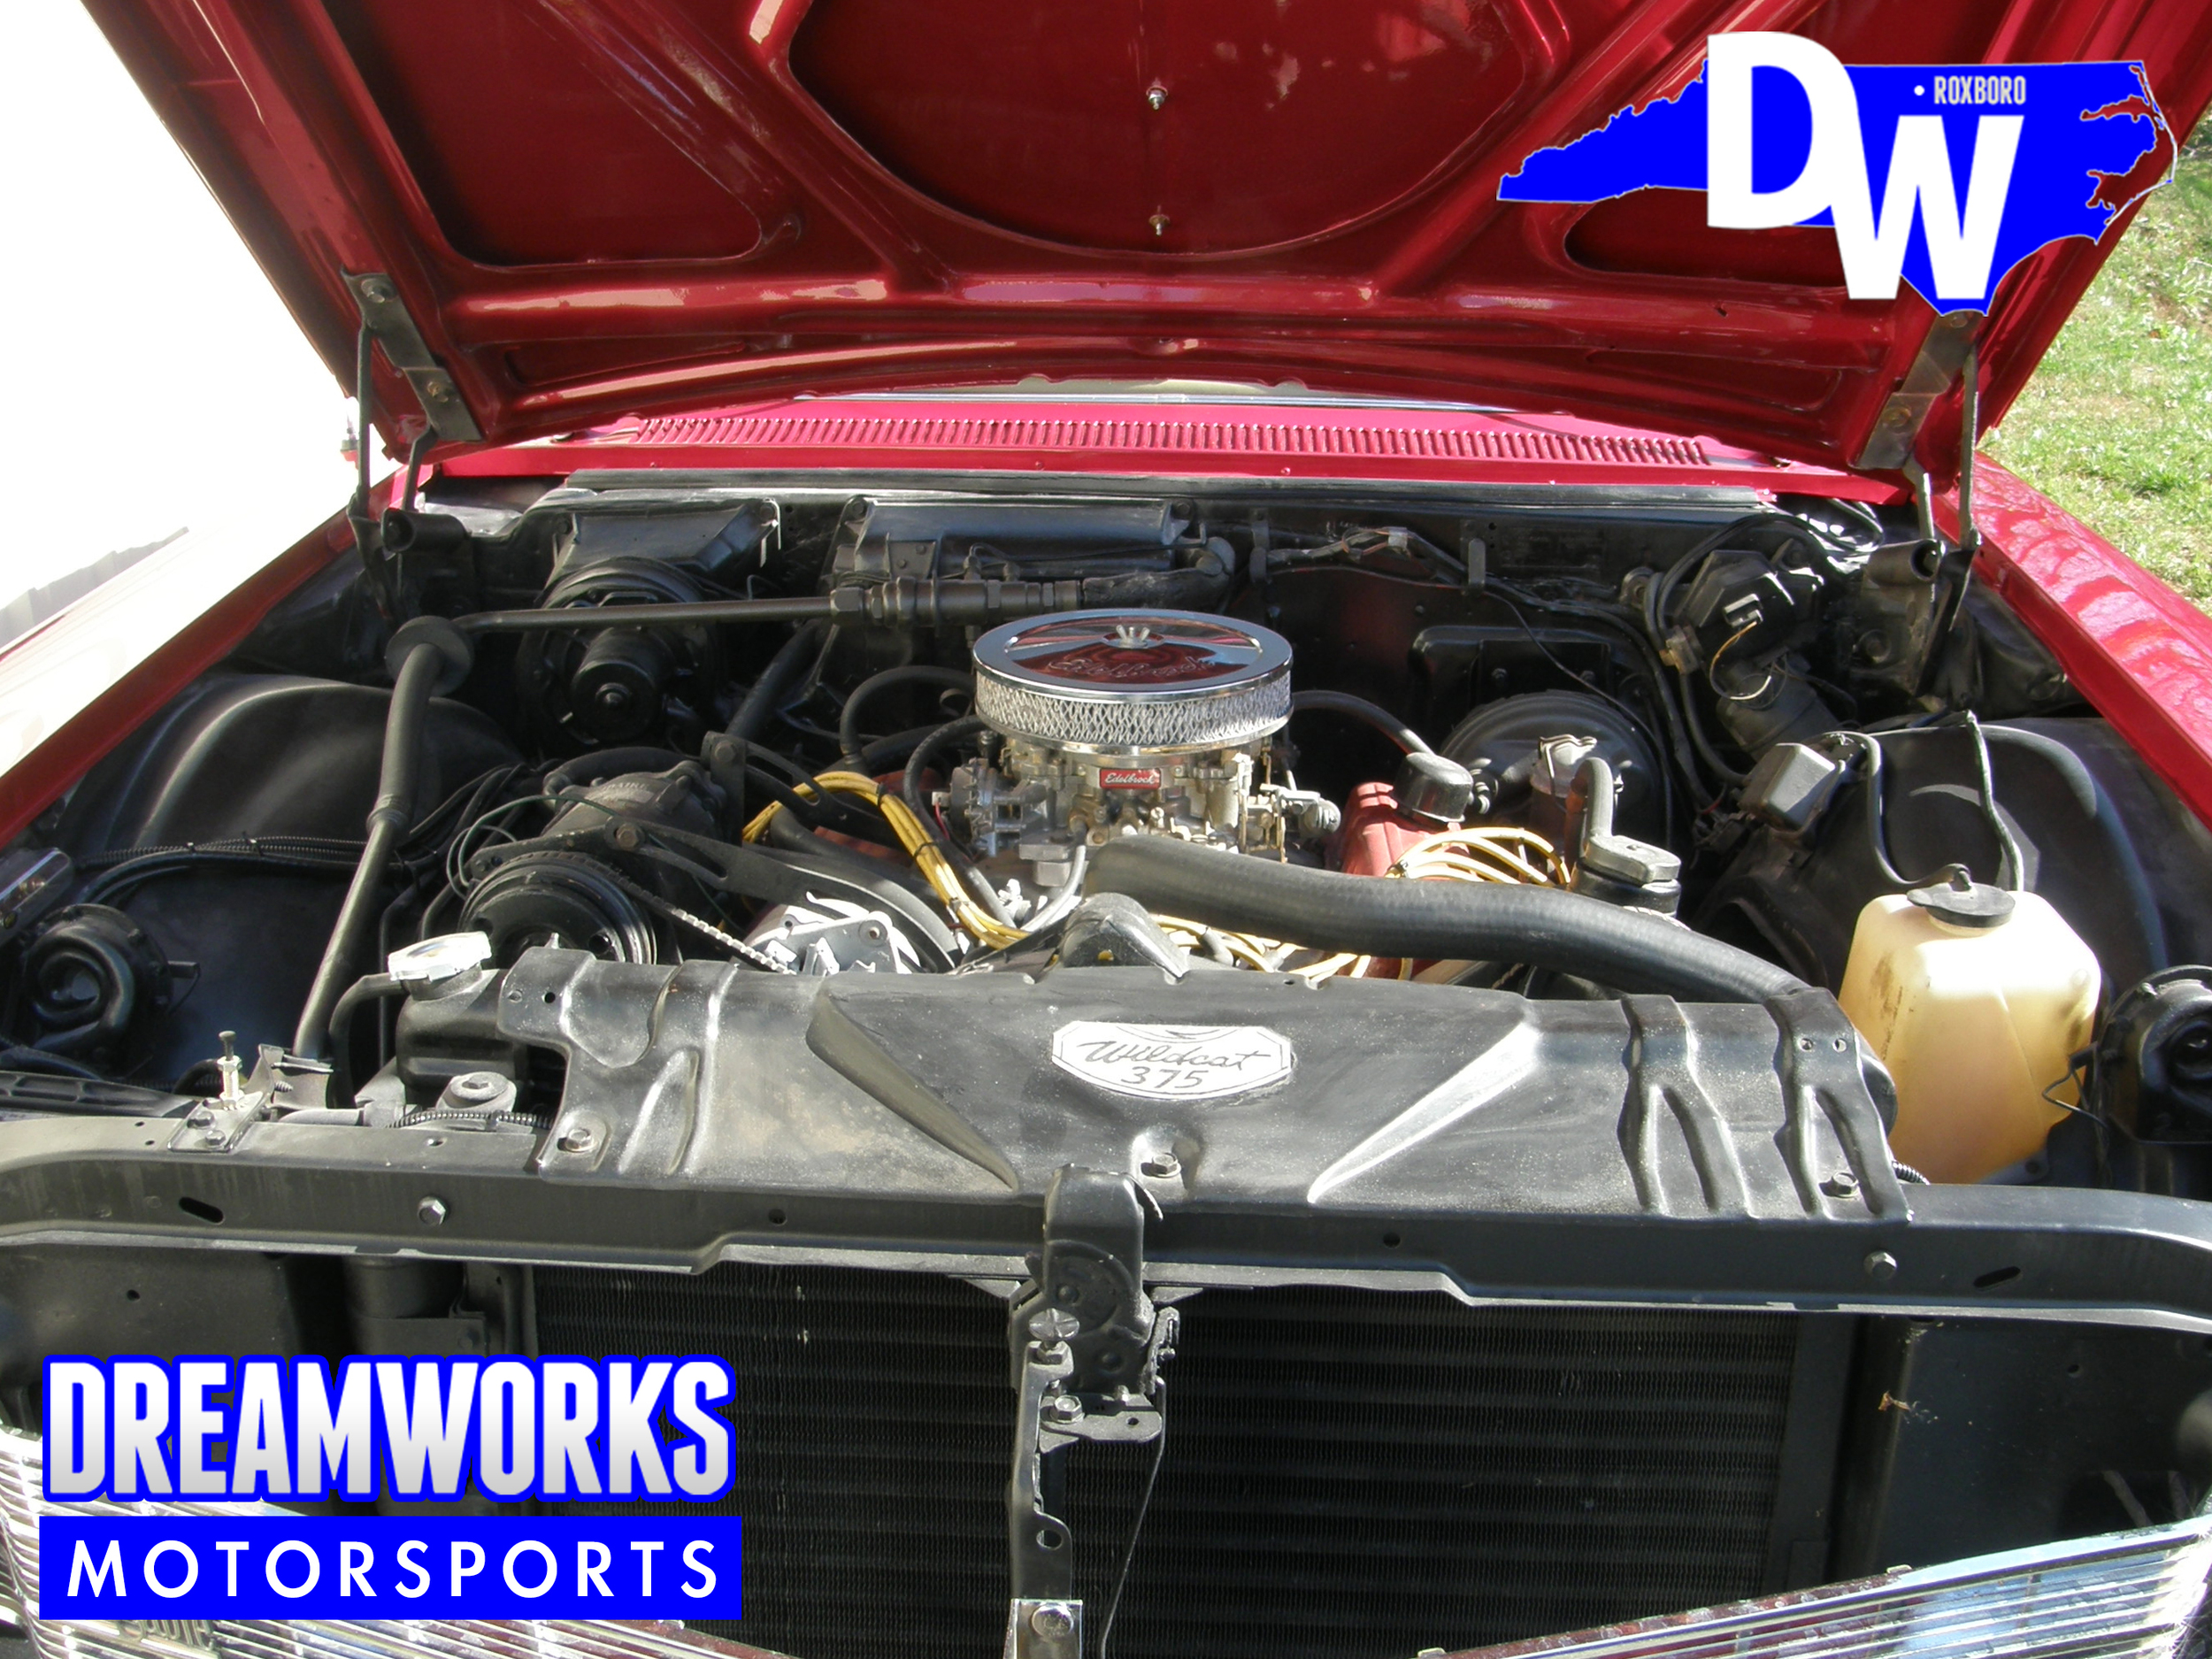 66-Buick-LeSabre-Dreamworks-Motorsports-9.jpg